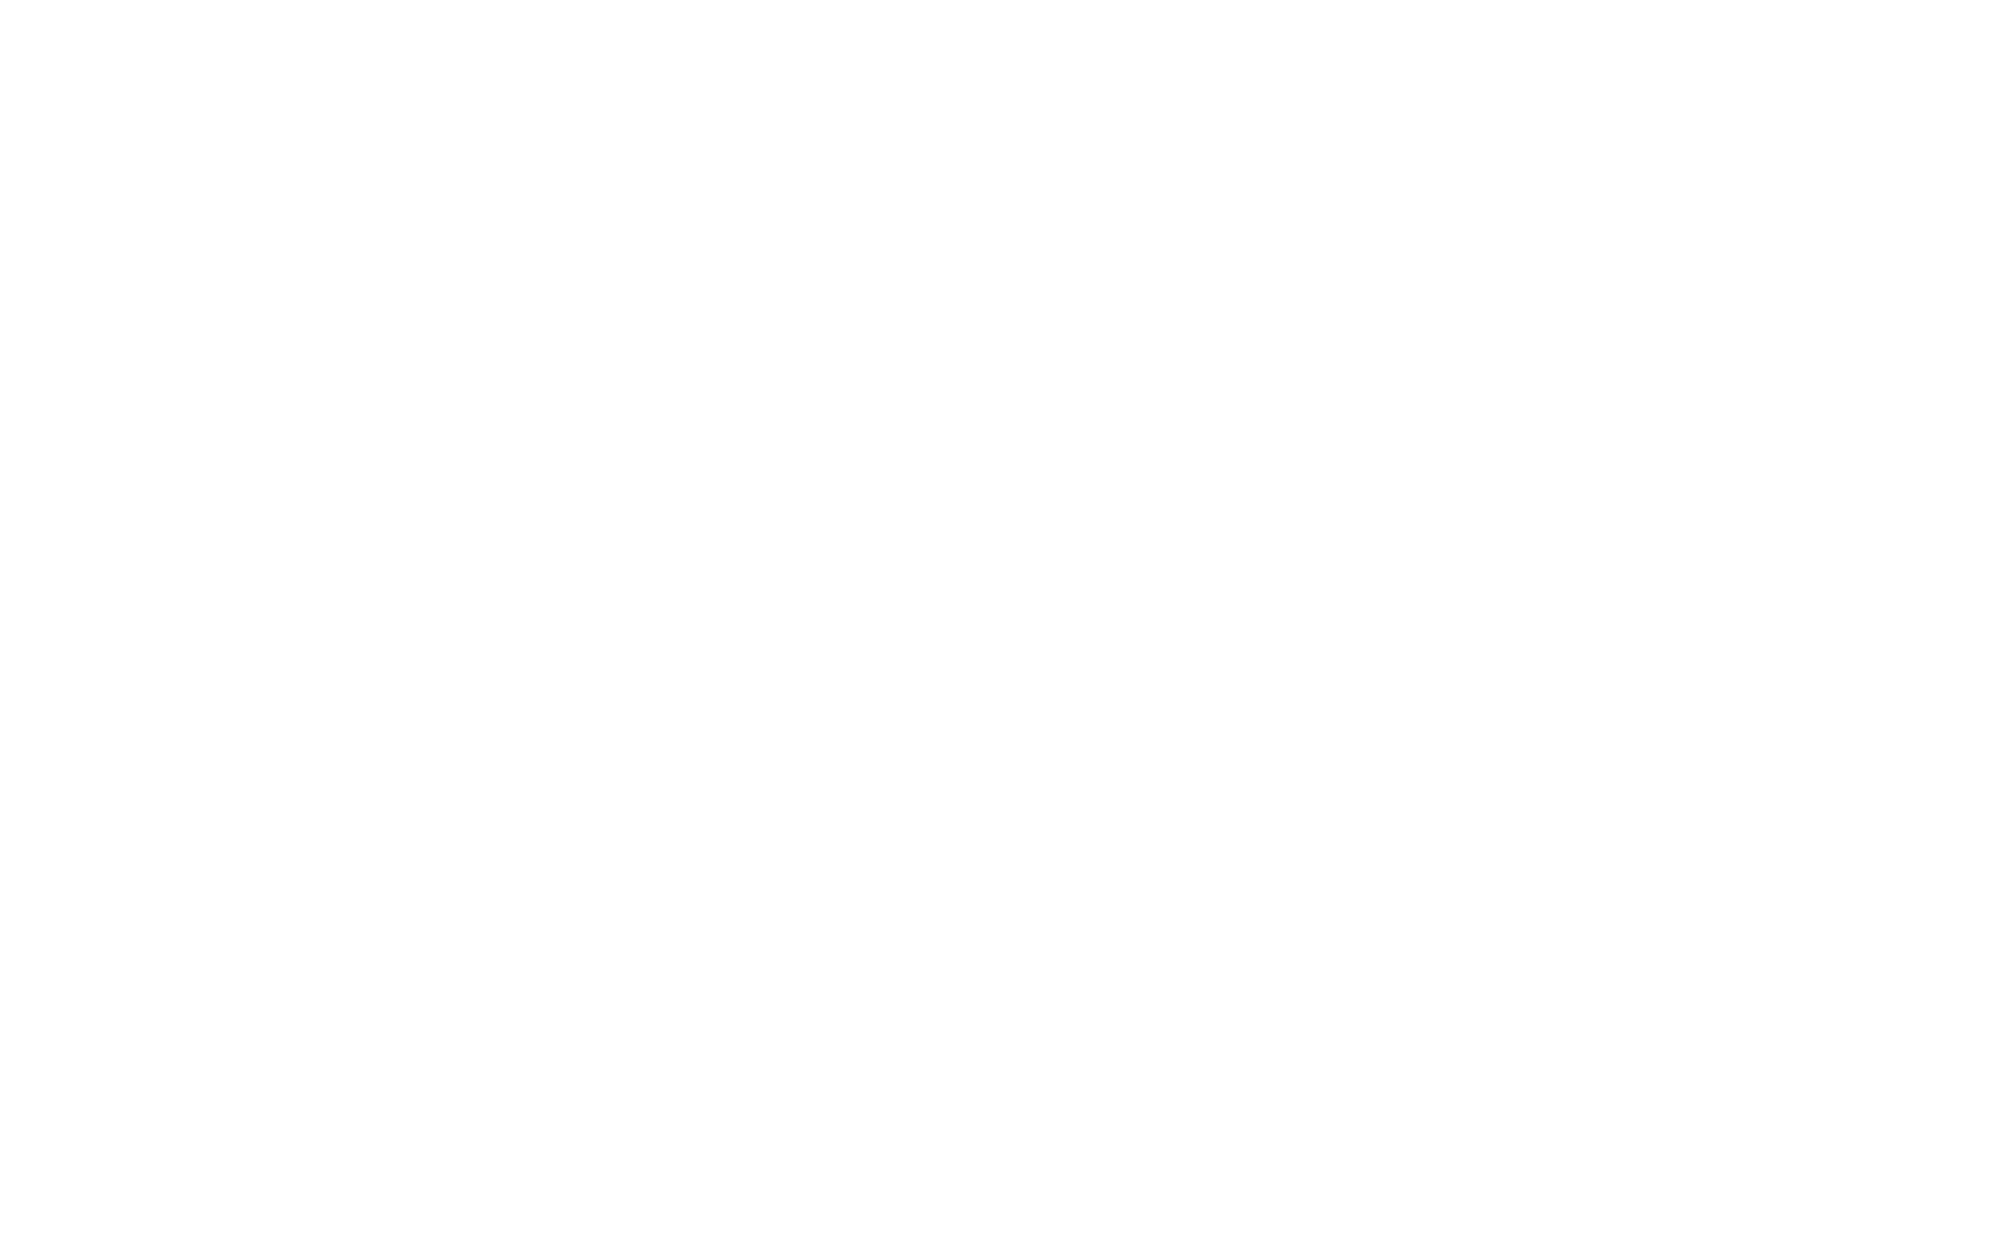 Sleeping Beauty logo